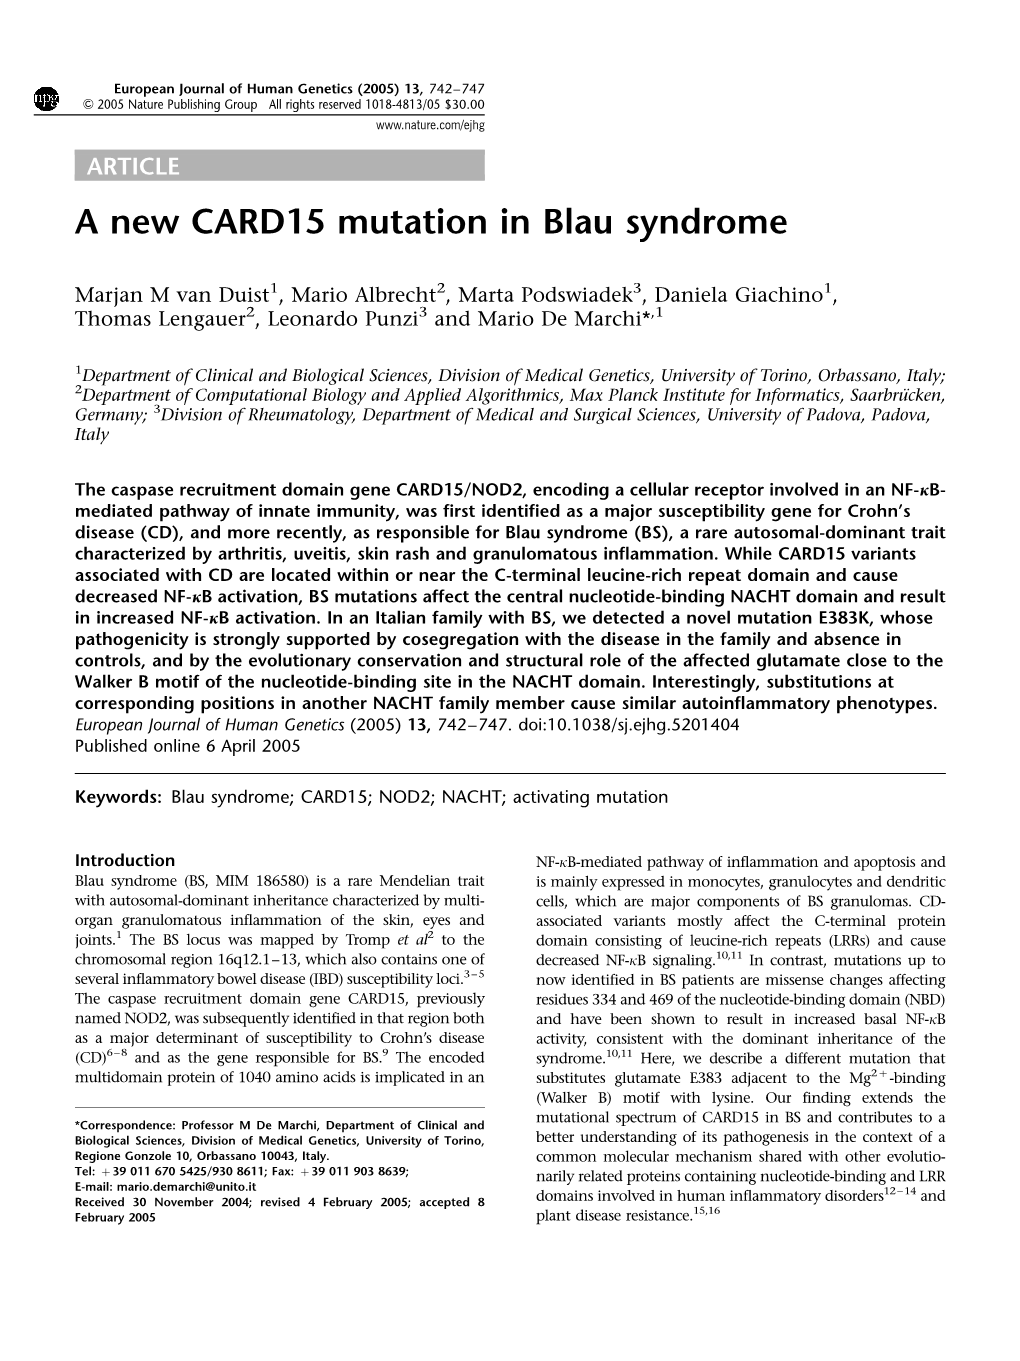 A New CARD15 Mutation in Blau Syndrome